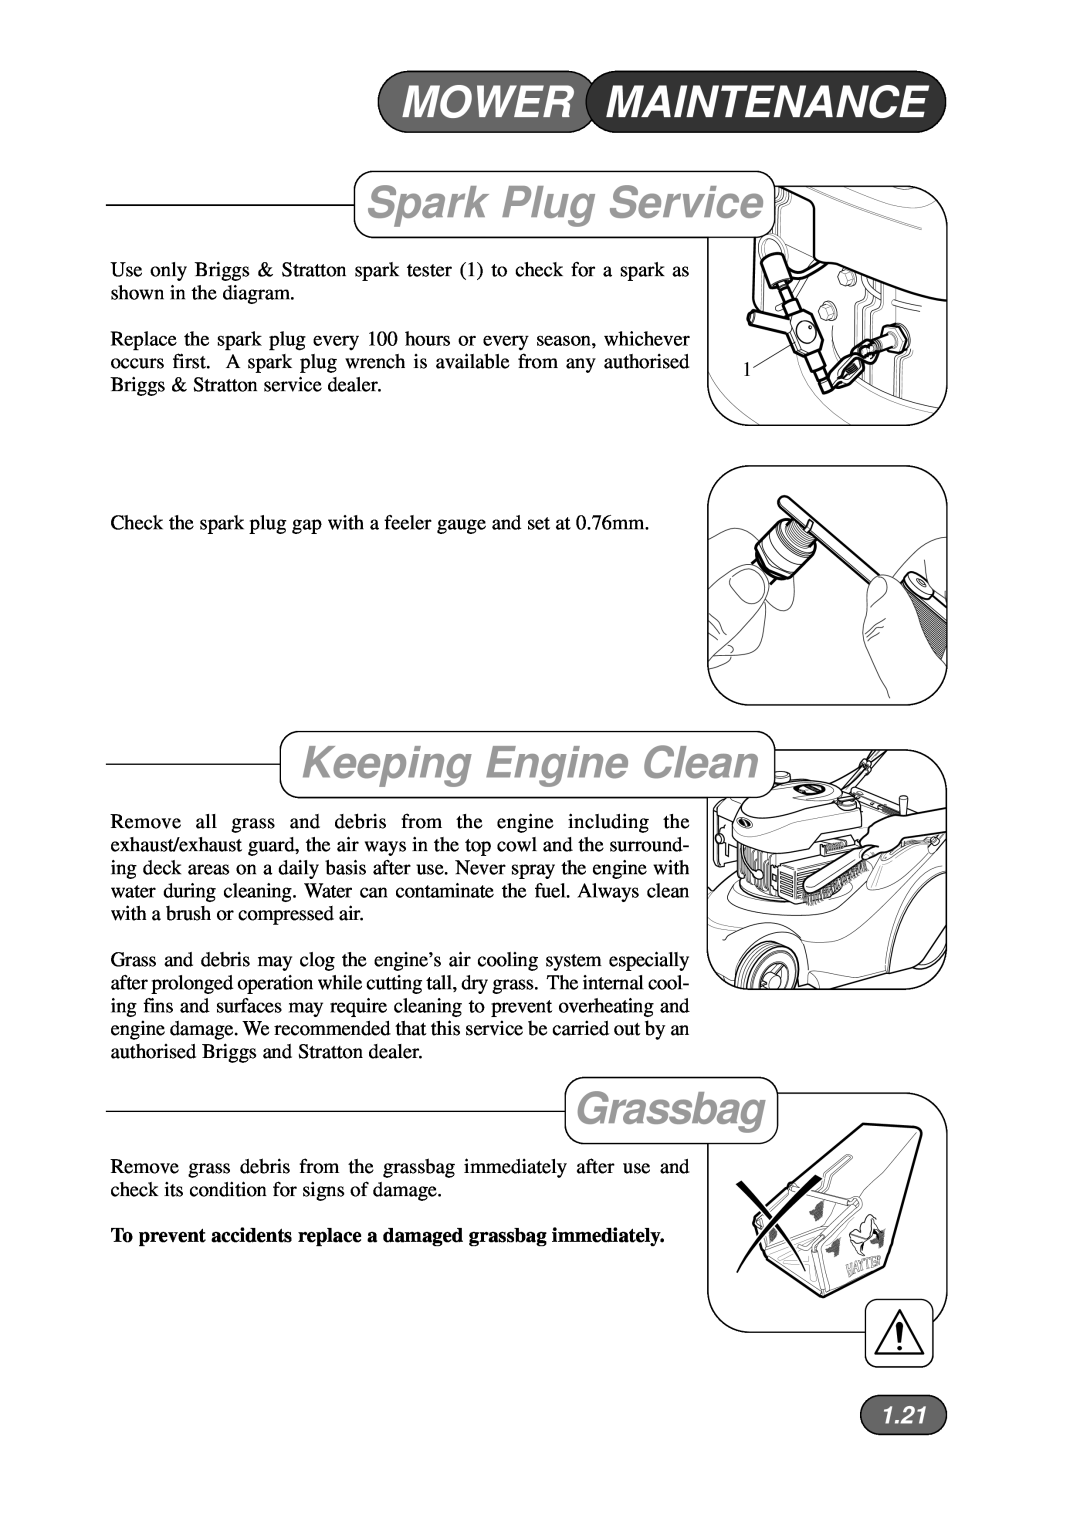 Briggs & Stratton Harrier 41 manual Spark Plug Service, Keeping Engine Clean, 1.21, Mower Maintenance, Grassbag 